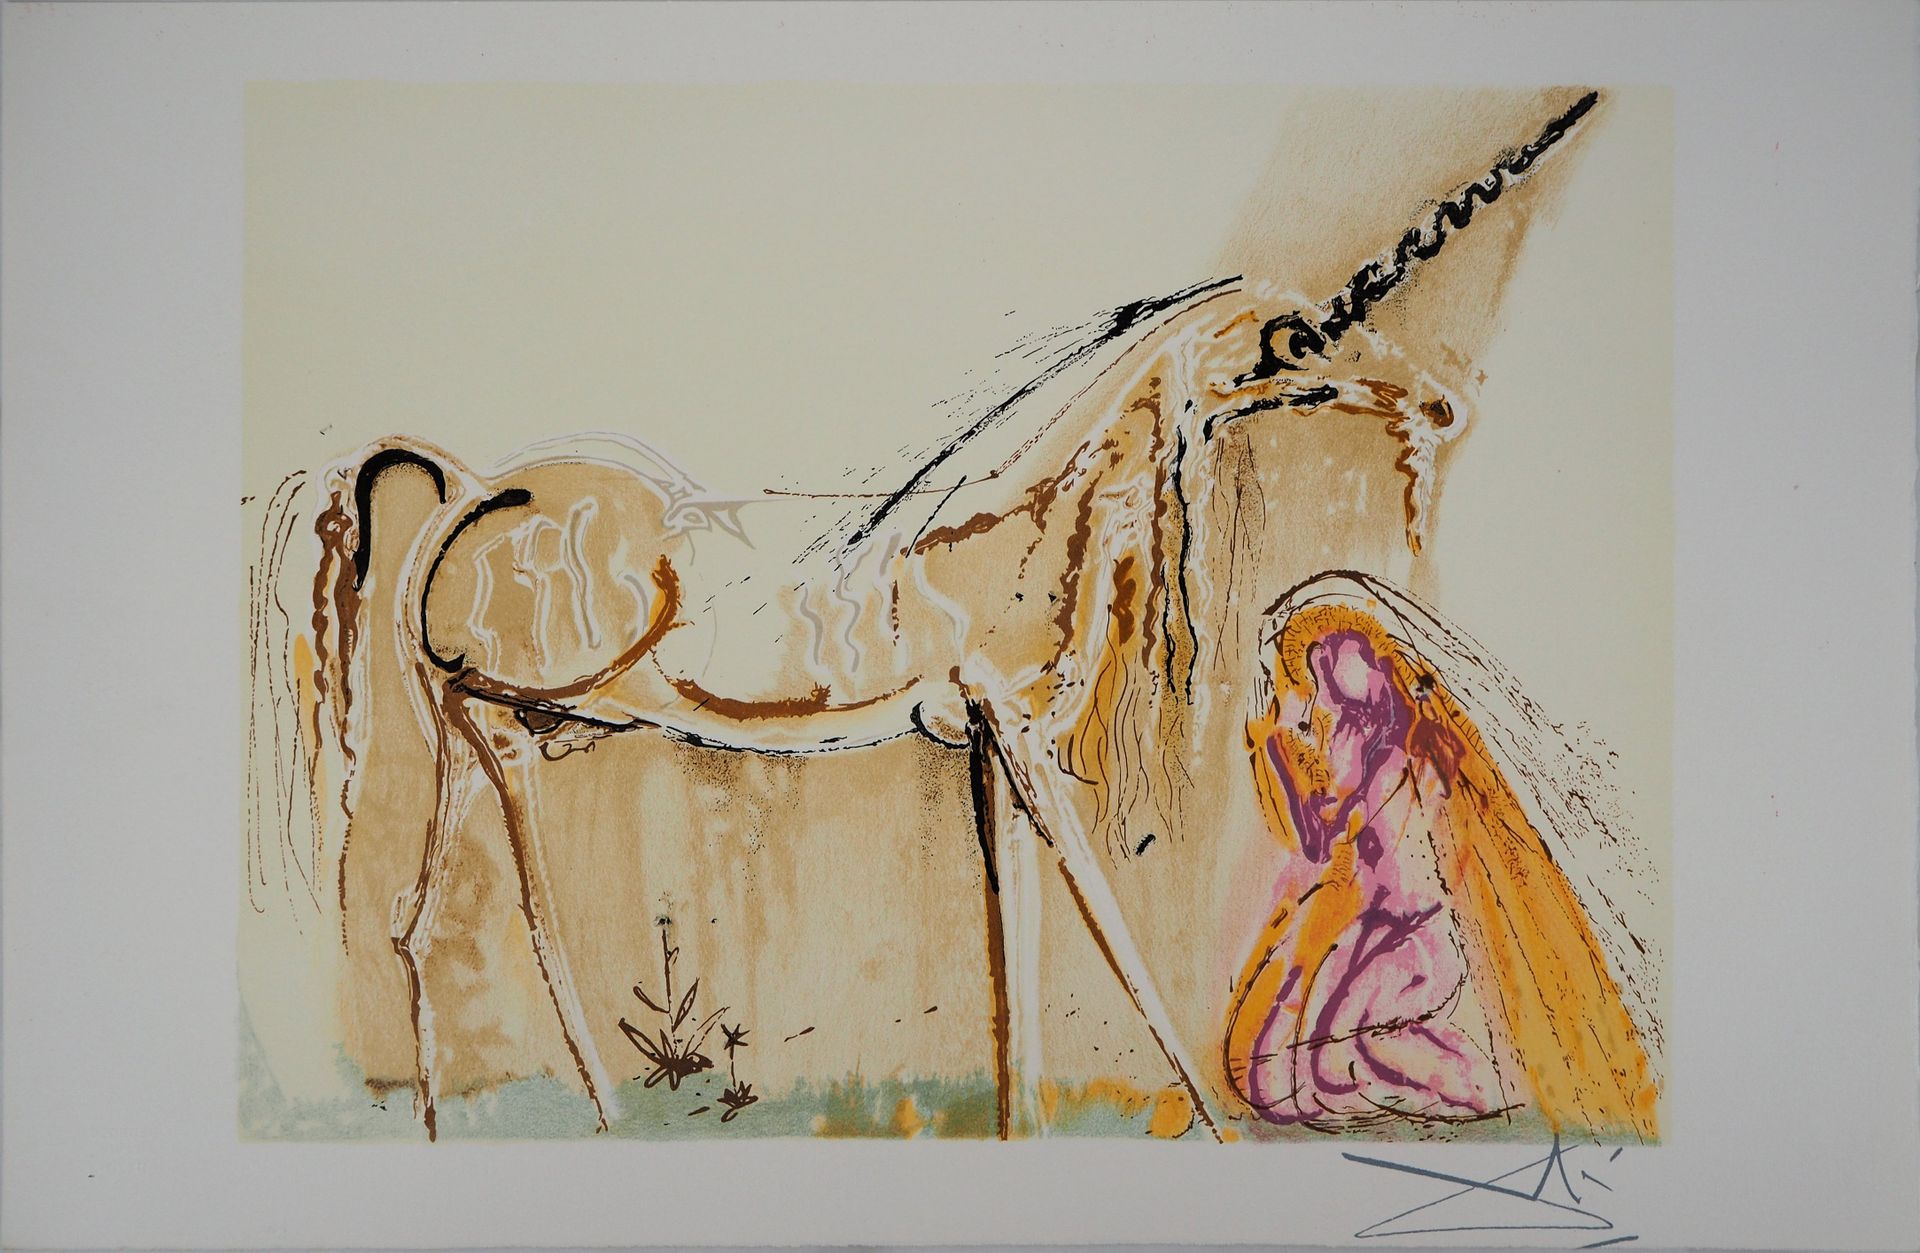 Salvador DALI Salvador DALI

独角兽

拱形牛皮纸上的原始石版画

板块中的签名

由Armand Israel出版，1983年

&hellip;